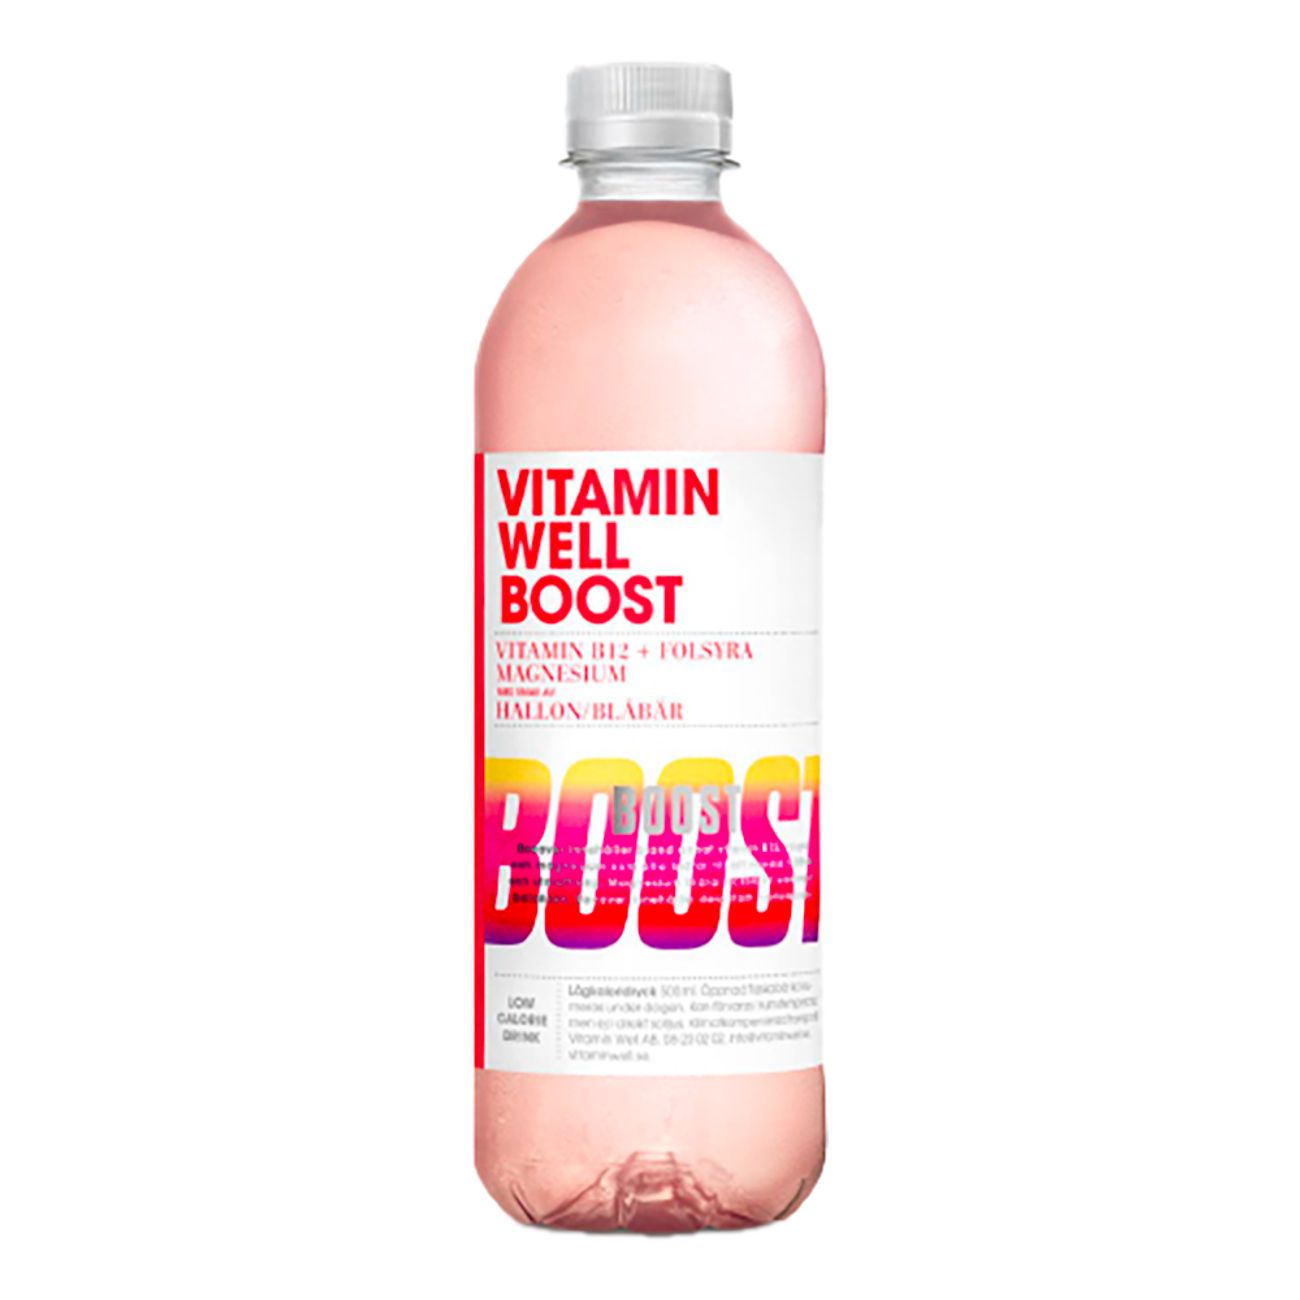 vitamin-well-boost-82469-1